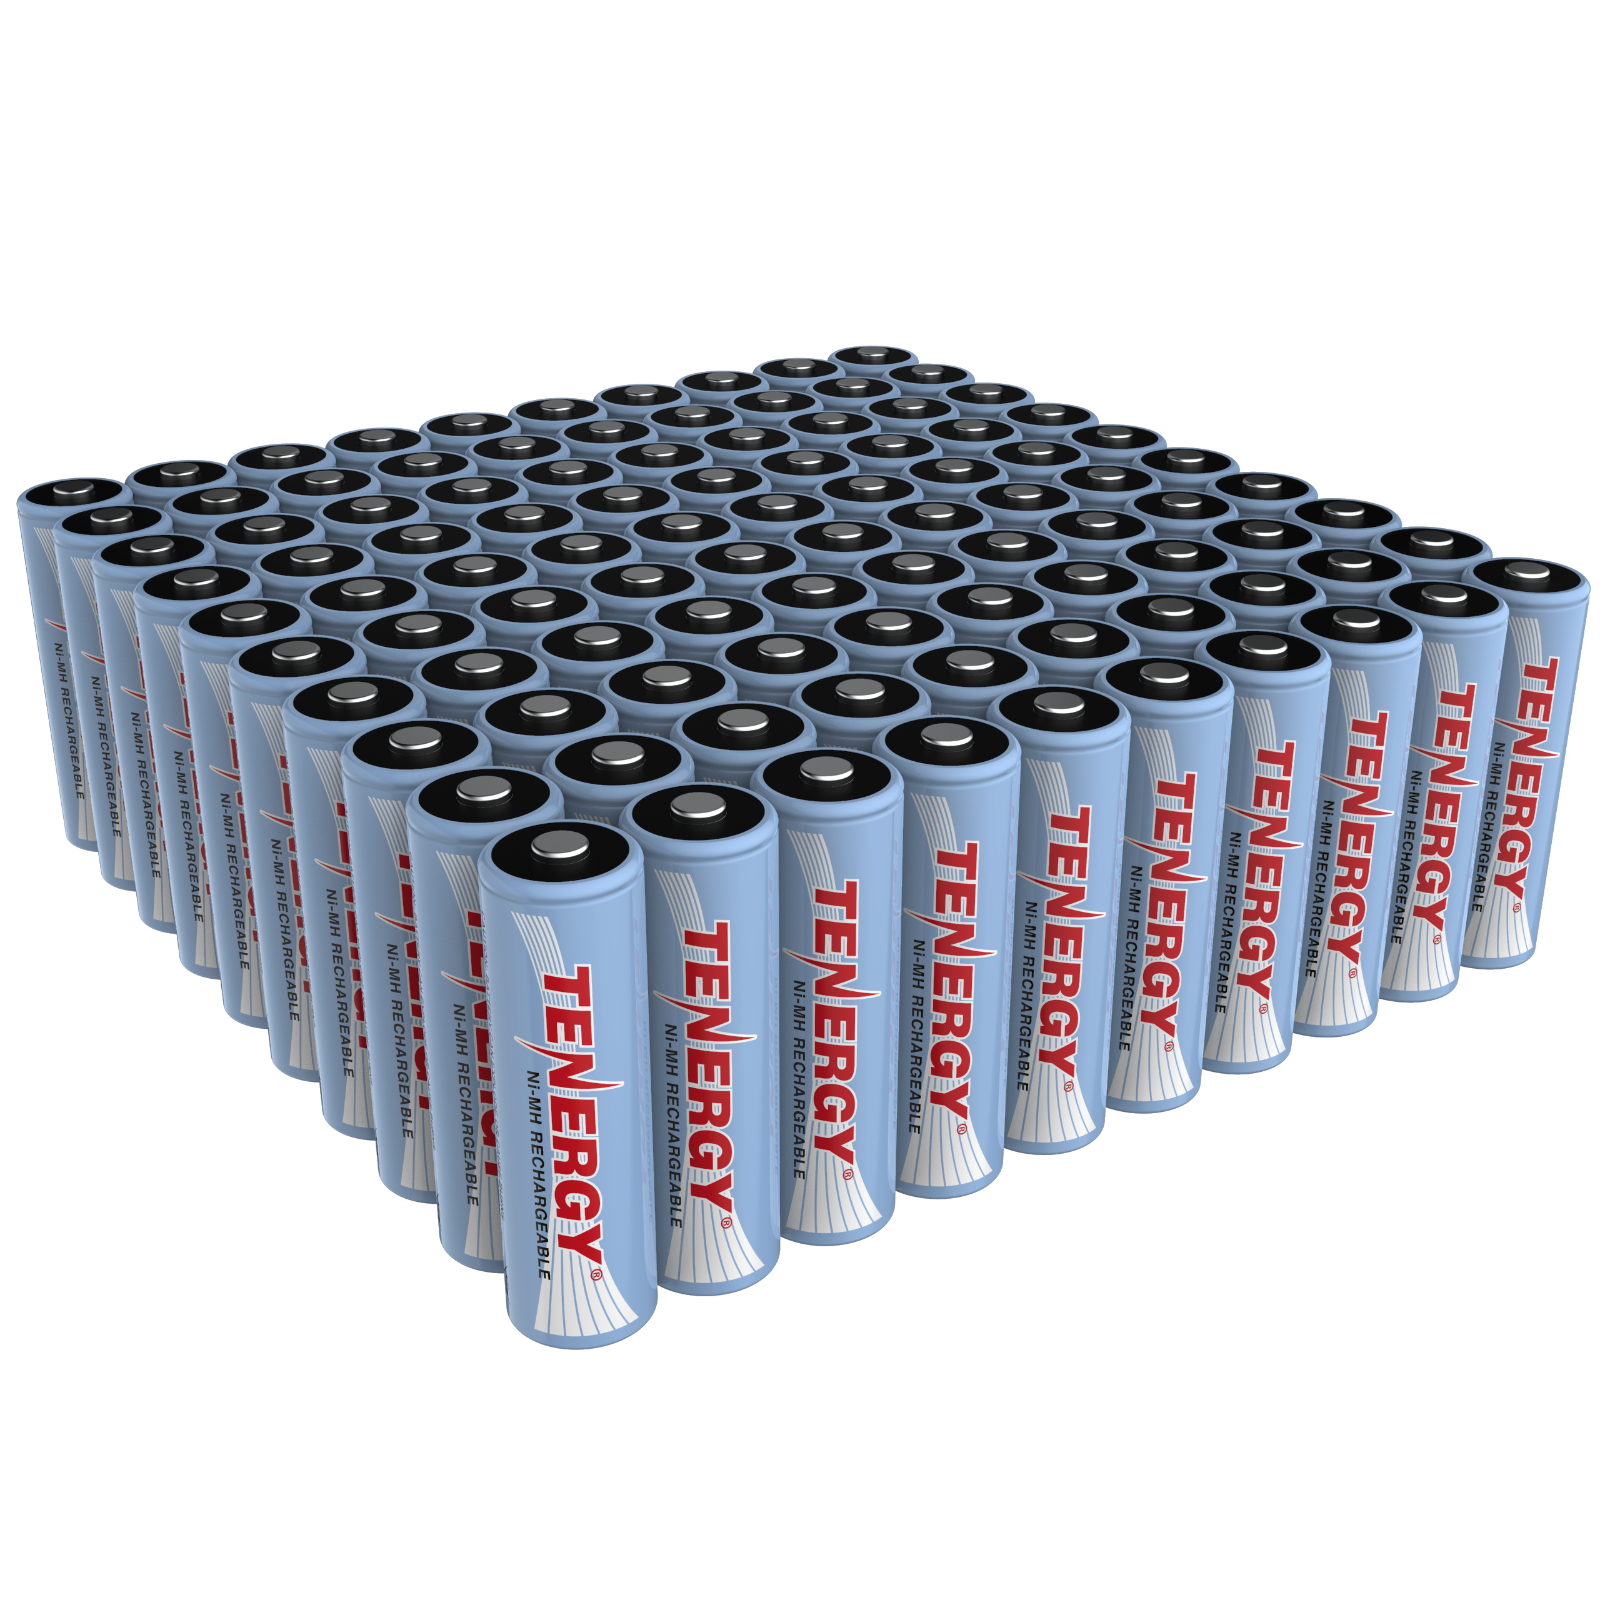 Combo Tenergy AA High Capacity 2500mAh NiMH Rechargeable Batteries Cells AA